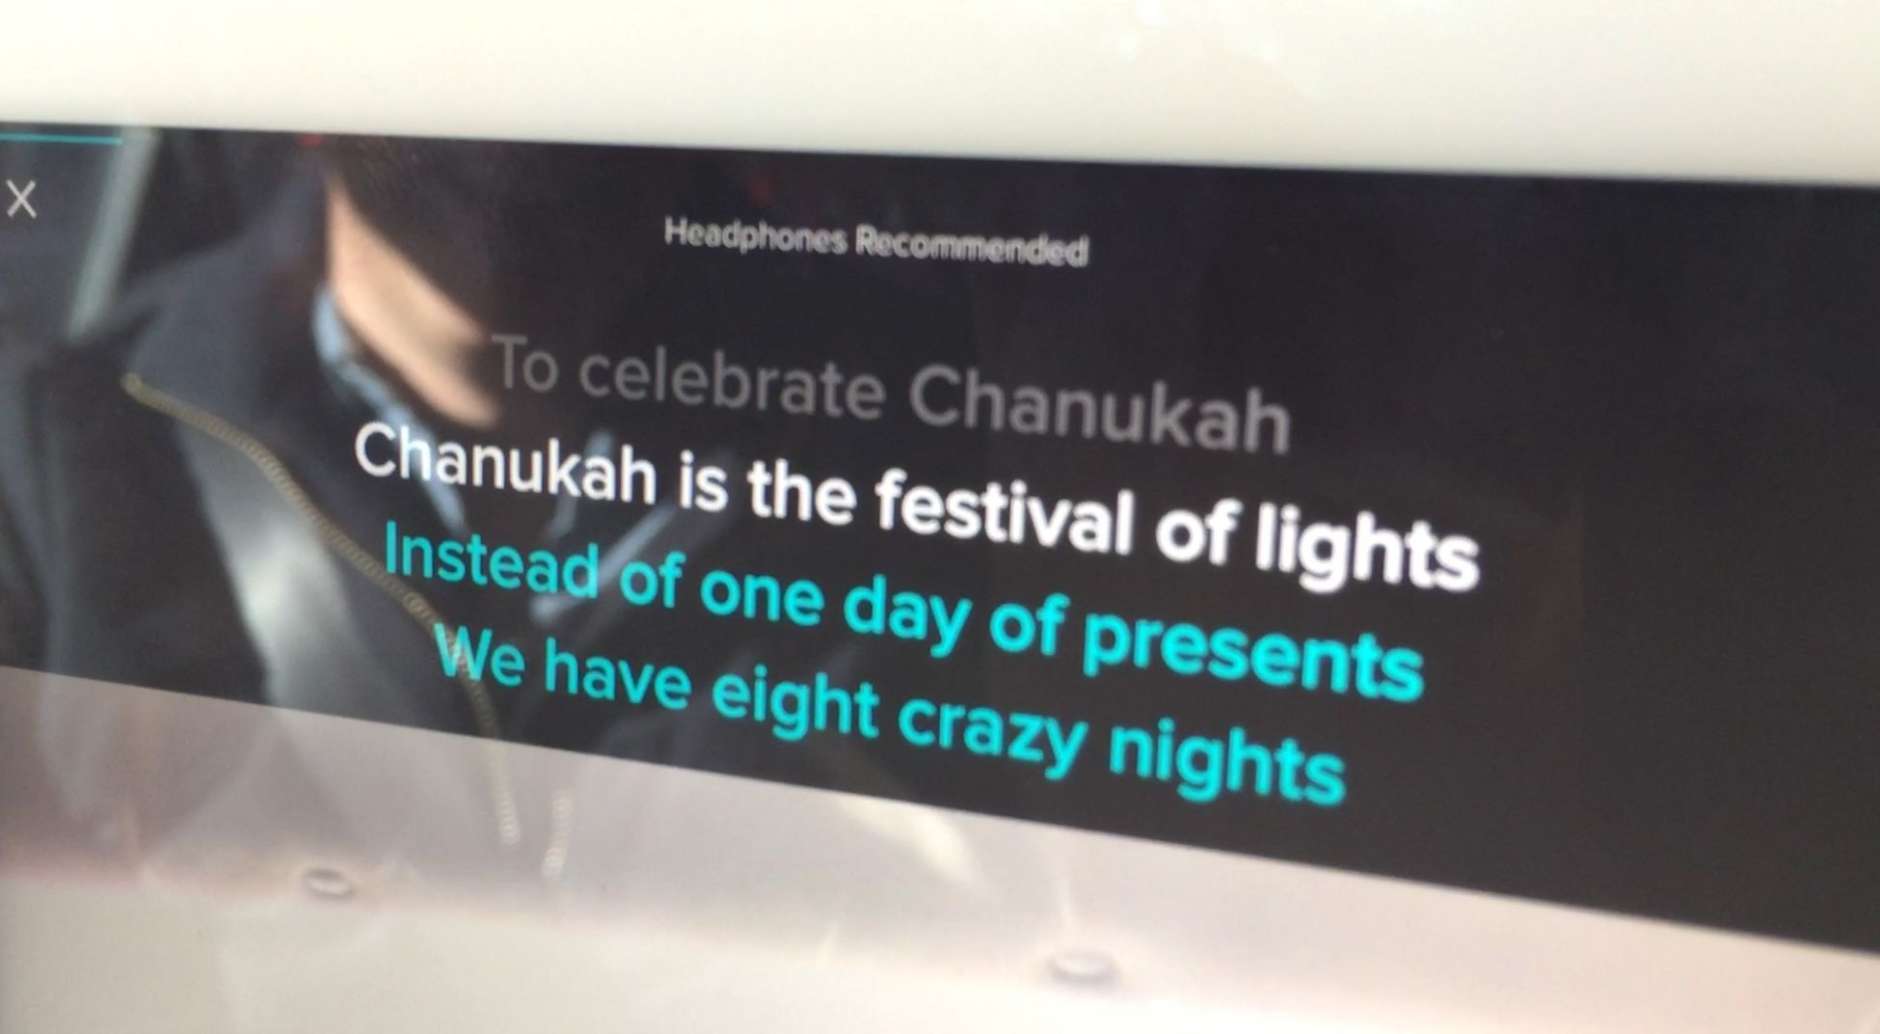 Karaoke lyrics to “The Chanukah Song” scroll on the Lyft Merry Mode car’s iPad. (WTOP/Kristi King)